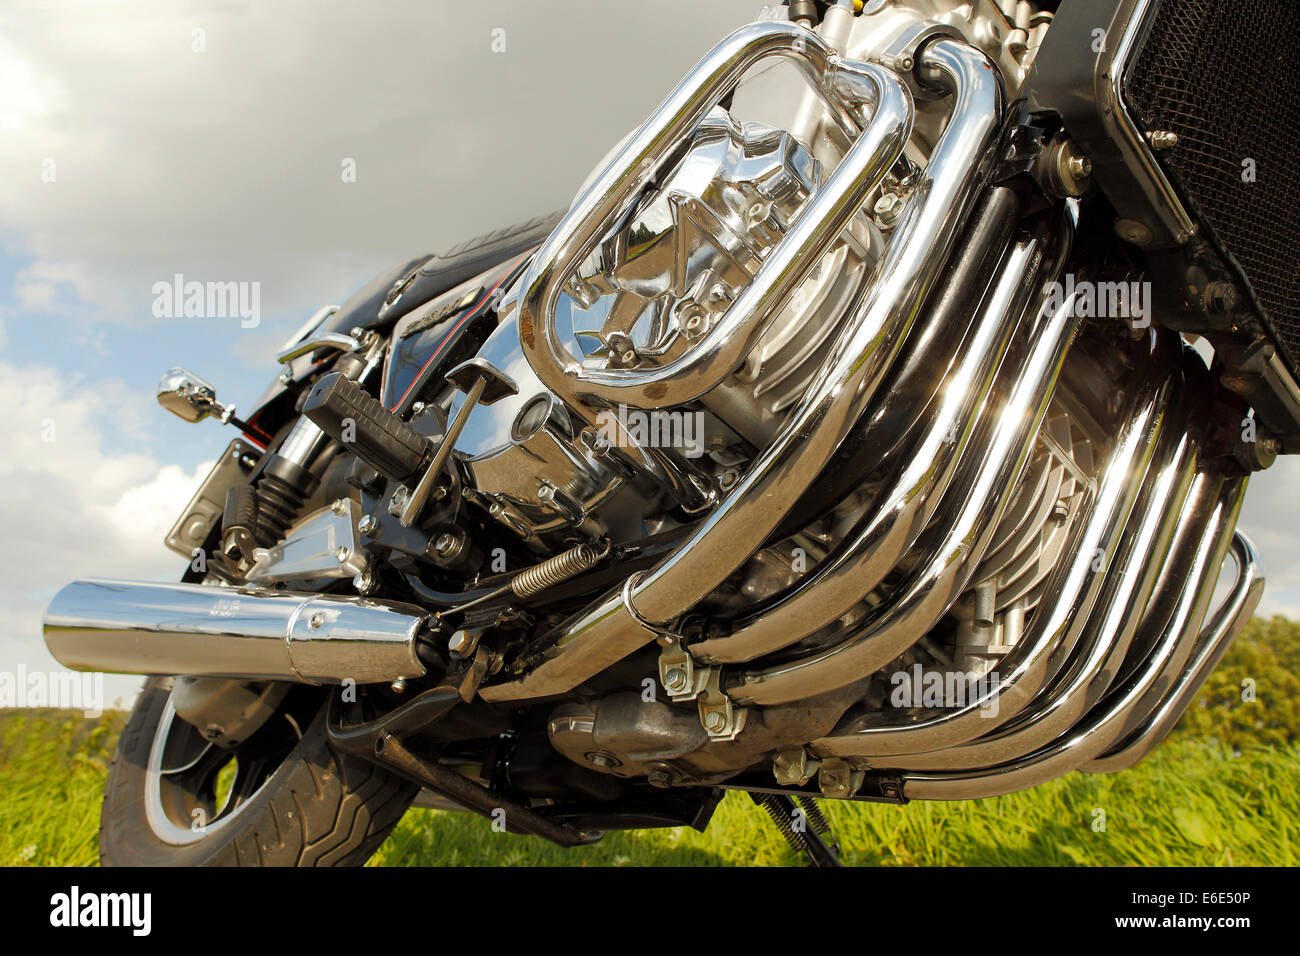 Motorcycle Stockfotos und Kaufen - Alamy